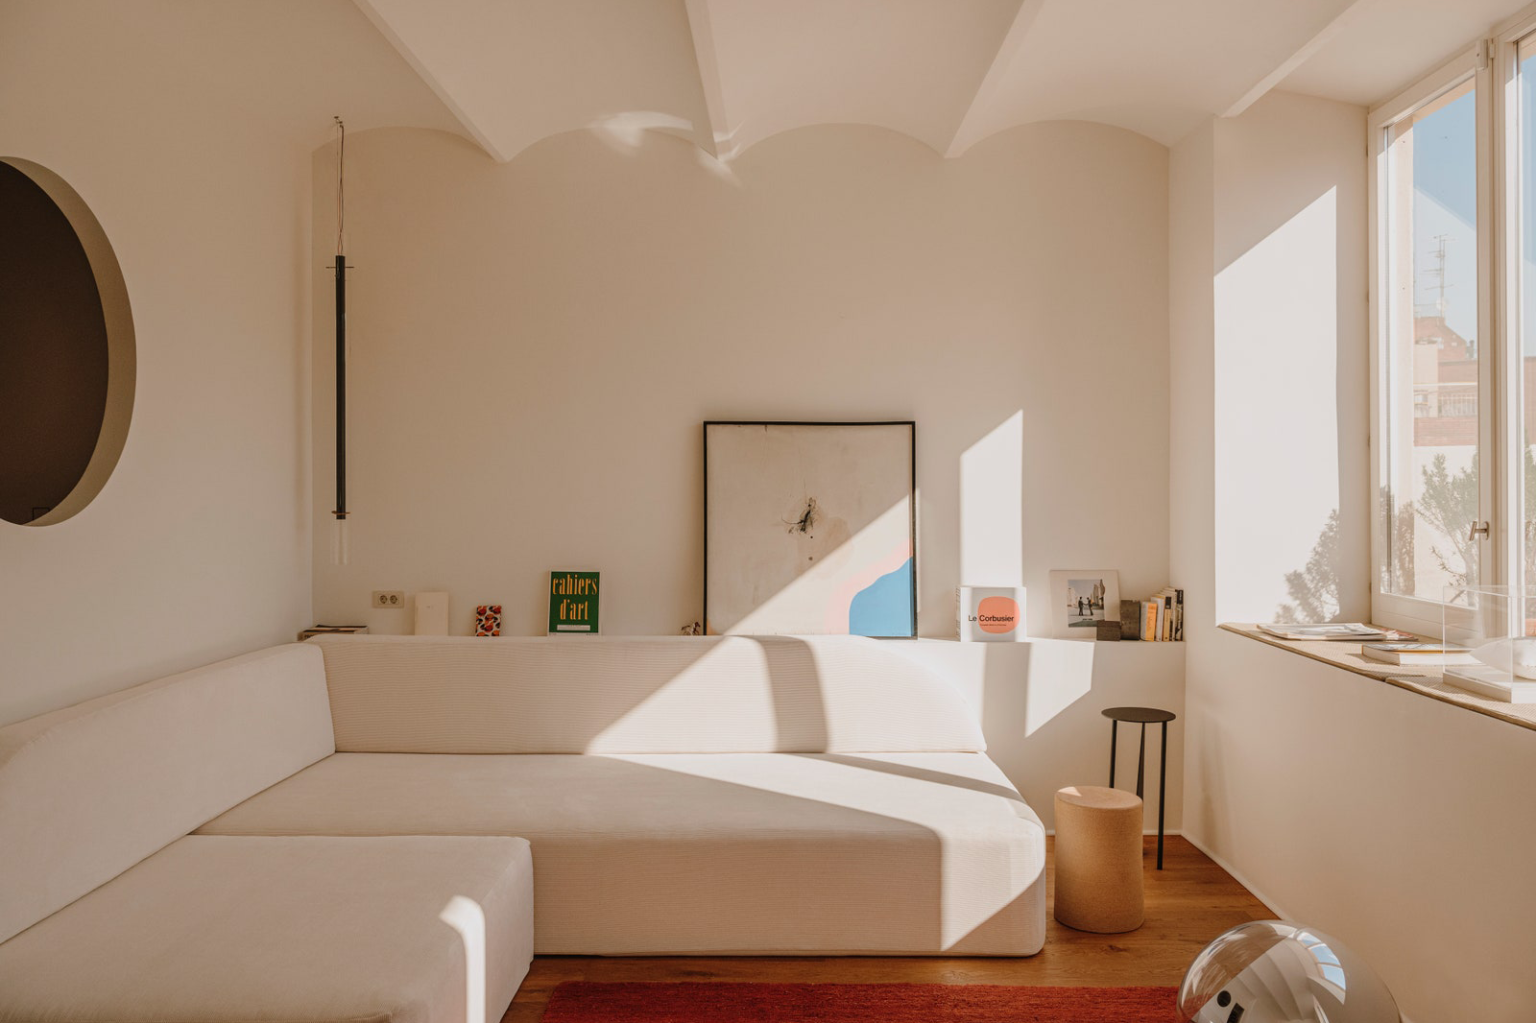 Architect Román Sarrió Maximizes Space in This Narrow Barcelona Home